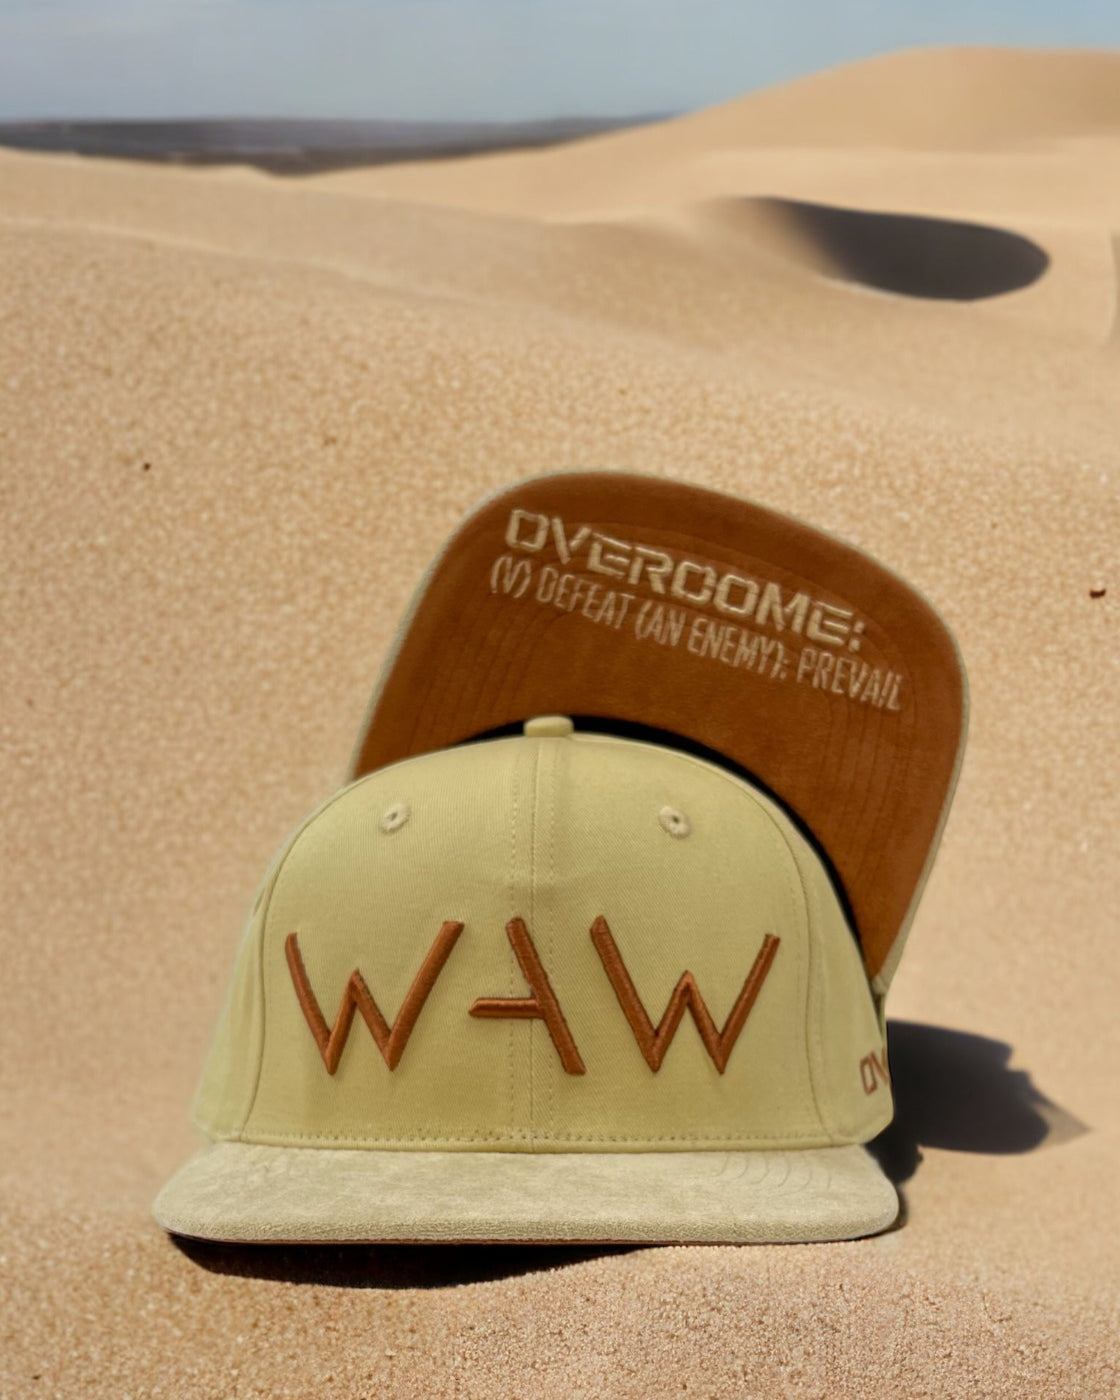 Sandstorm WAW Flatbill Hat, WAW logo and Overcome message, WeAreWarriorsApparel.com